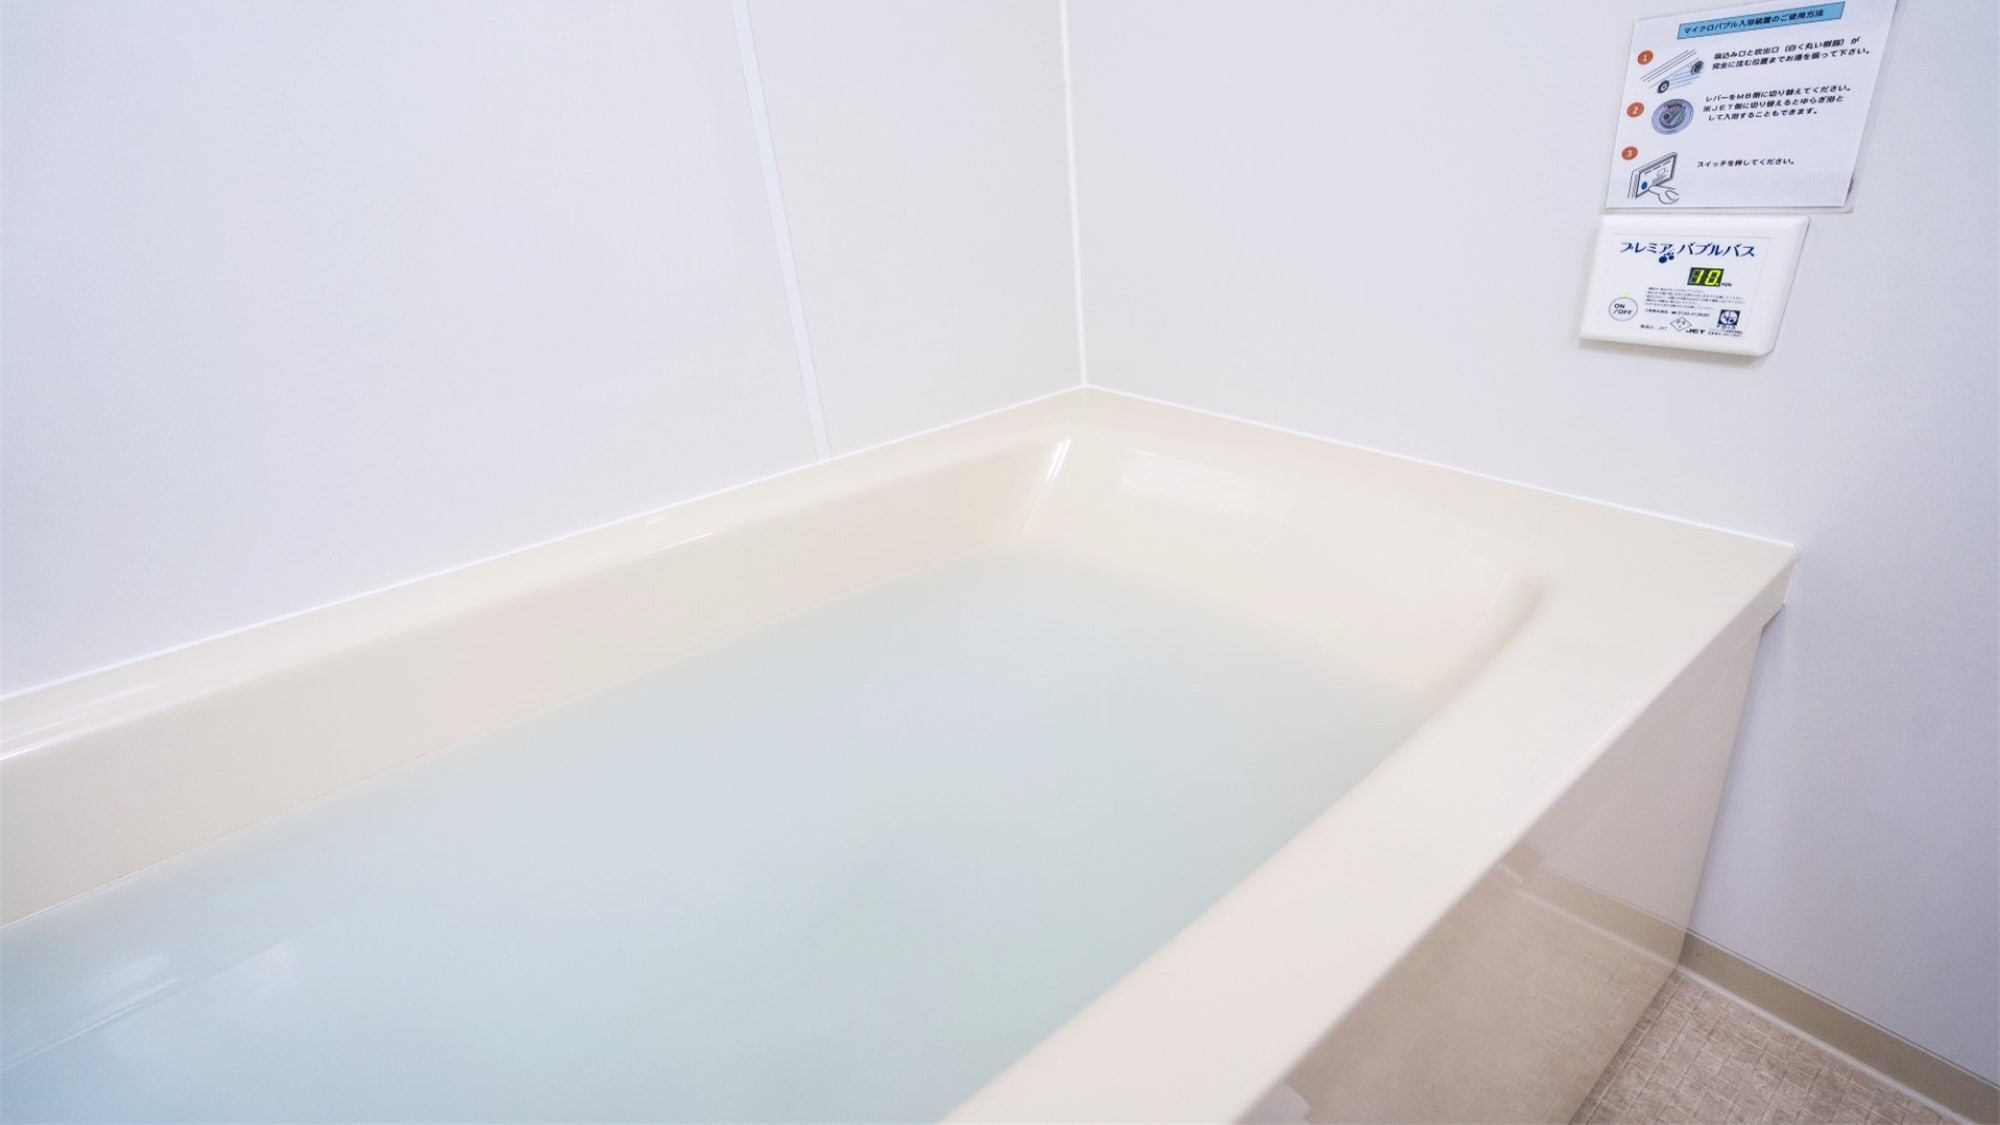 Deluxe room bathtub micro bubble bath